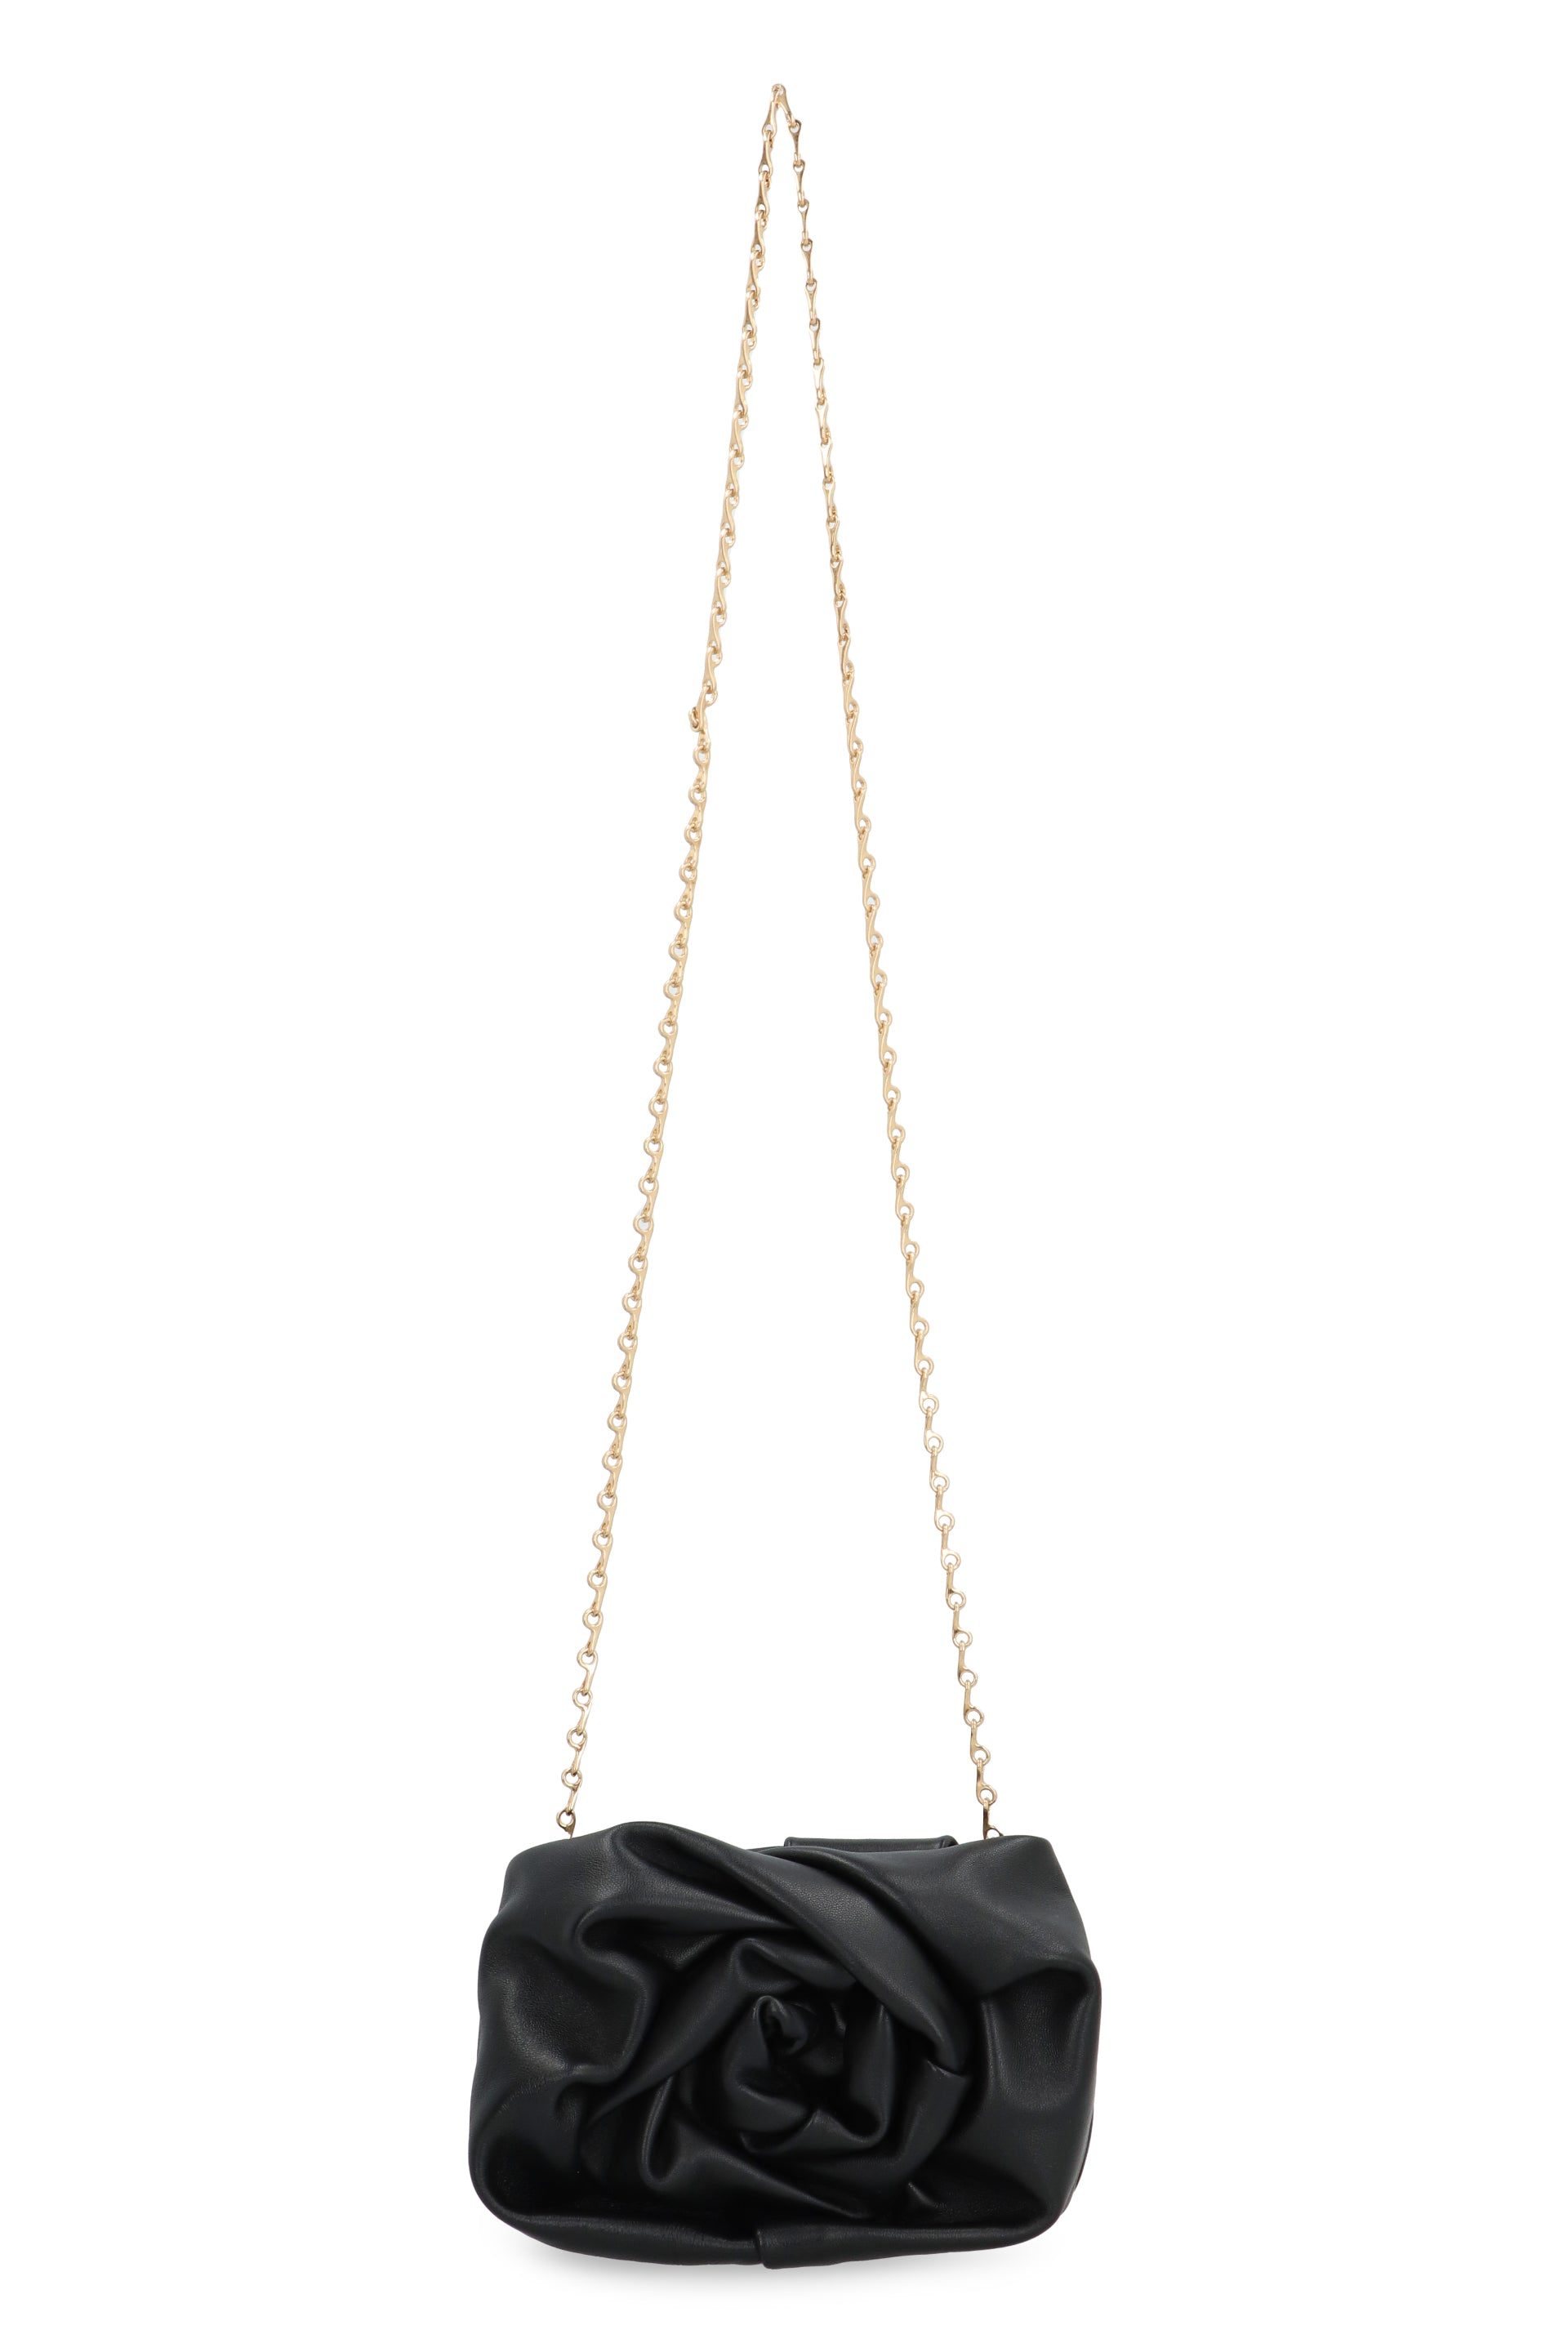 Shop Burberry Elegant Black Leather Clutch For Women